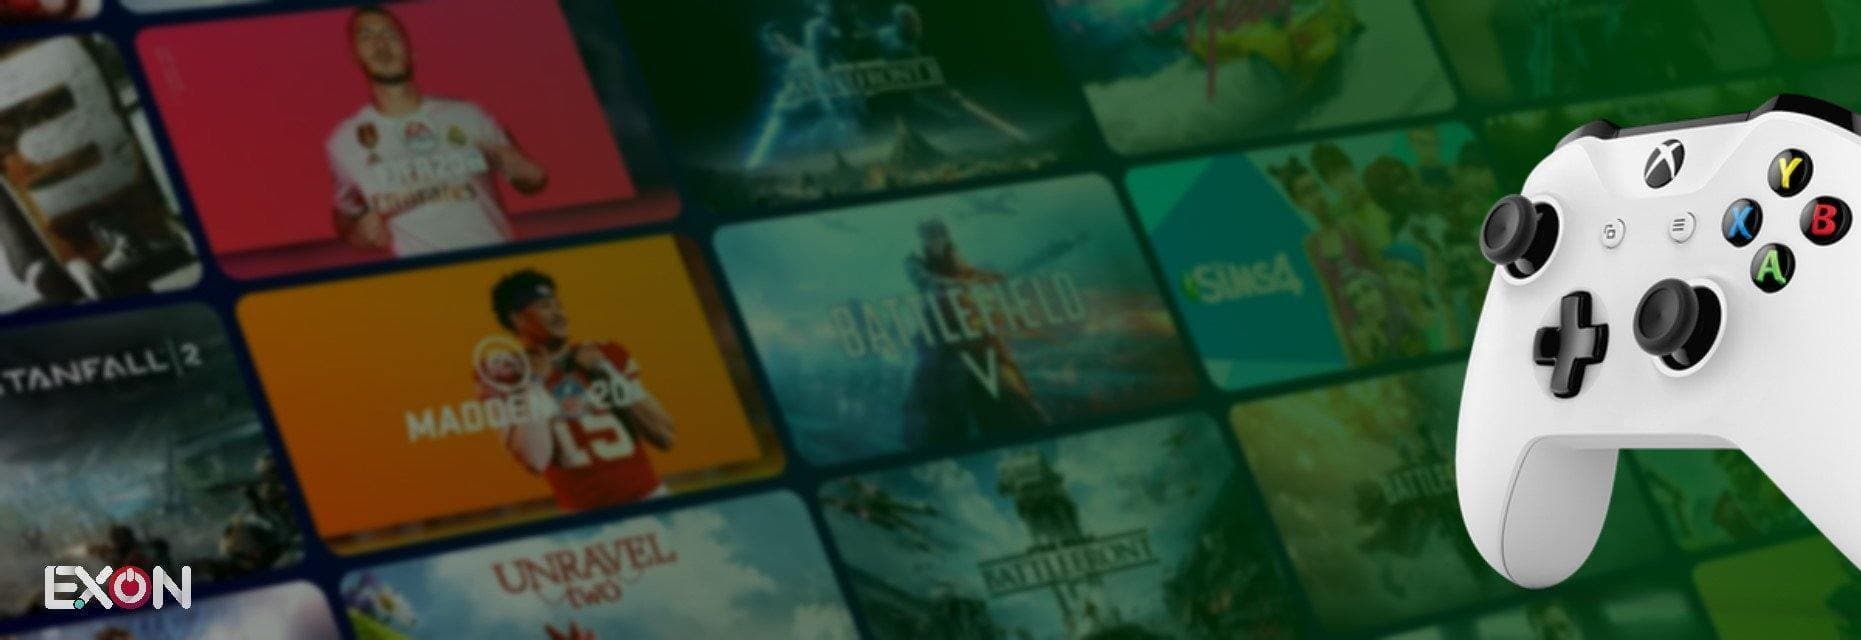 Xbox Game Pass Ultimate מנוי ל-14 ימים (גרסת ניסיון) - EXON גיימס - משחקים ותוכנות למחשב ולאקס בוקס!